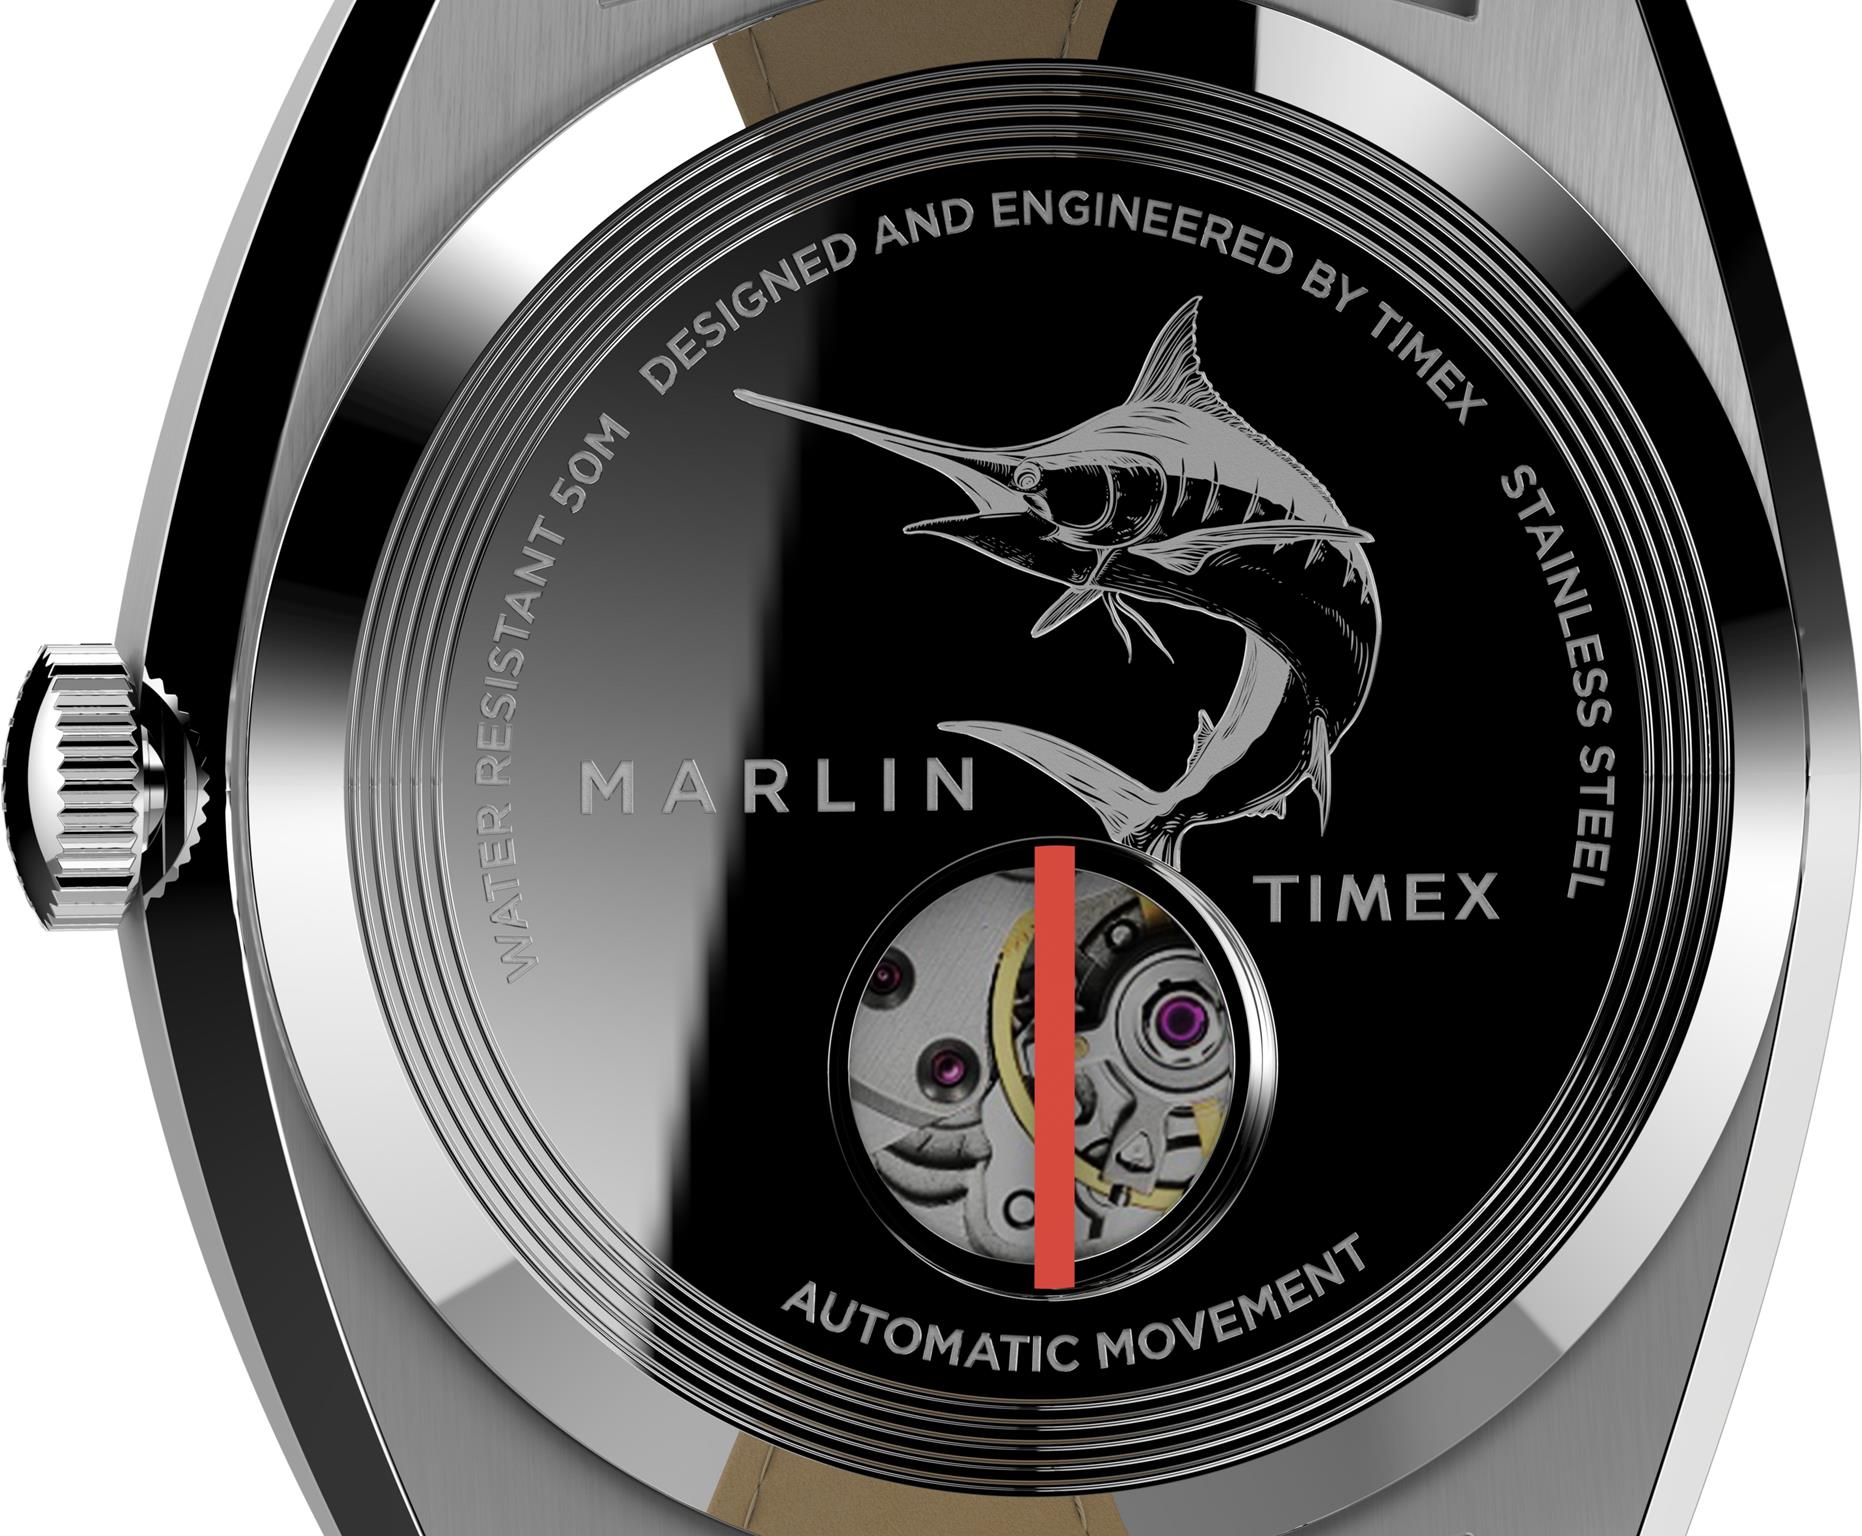 Timex - Marlin Automatic